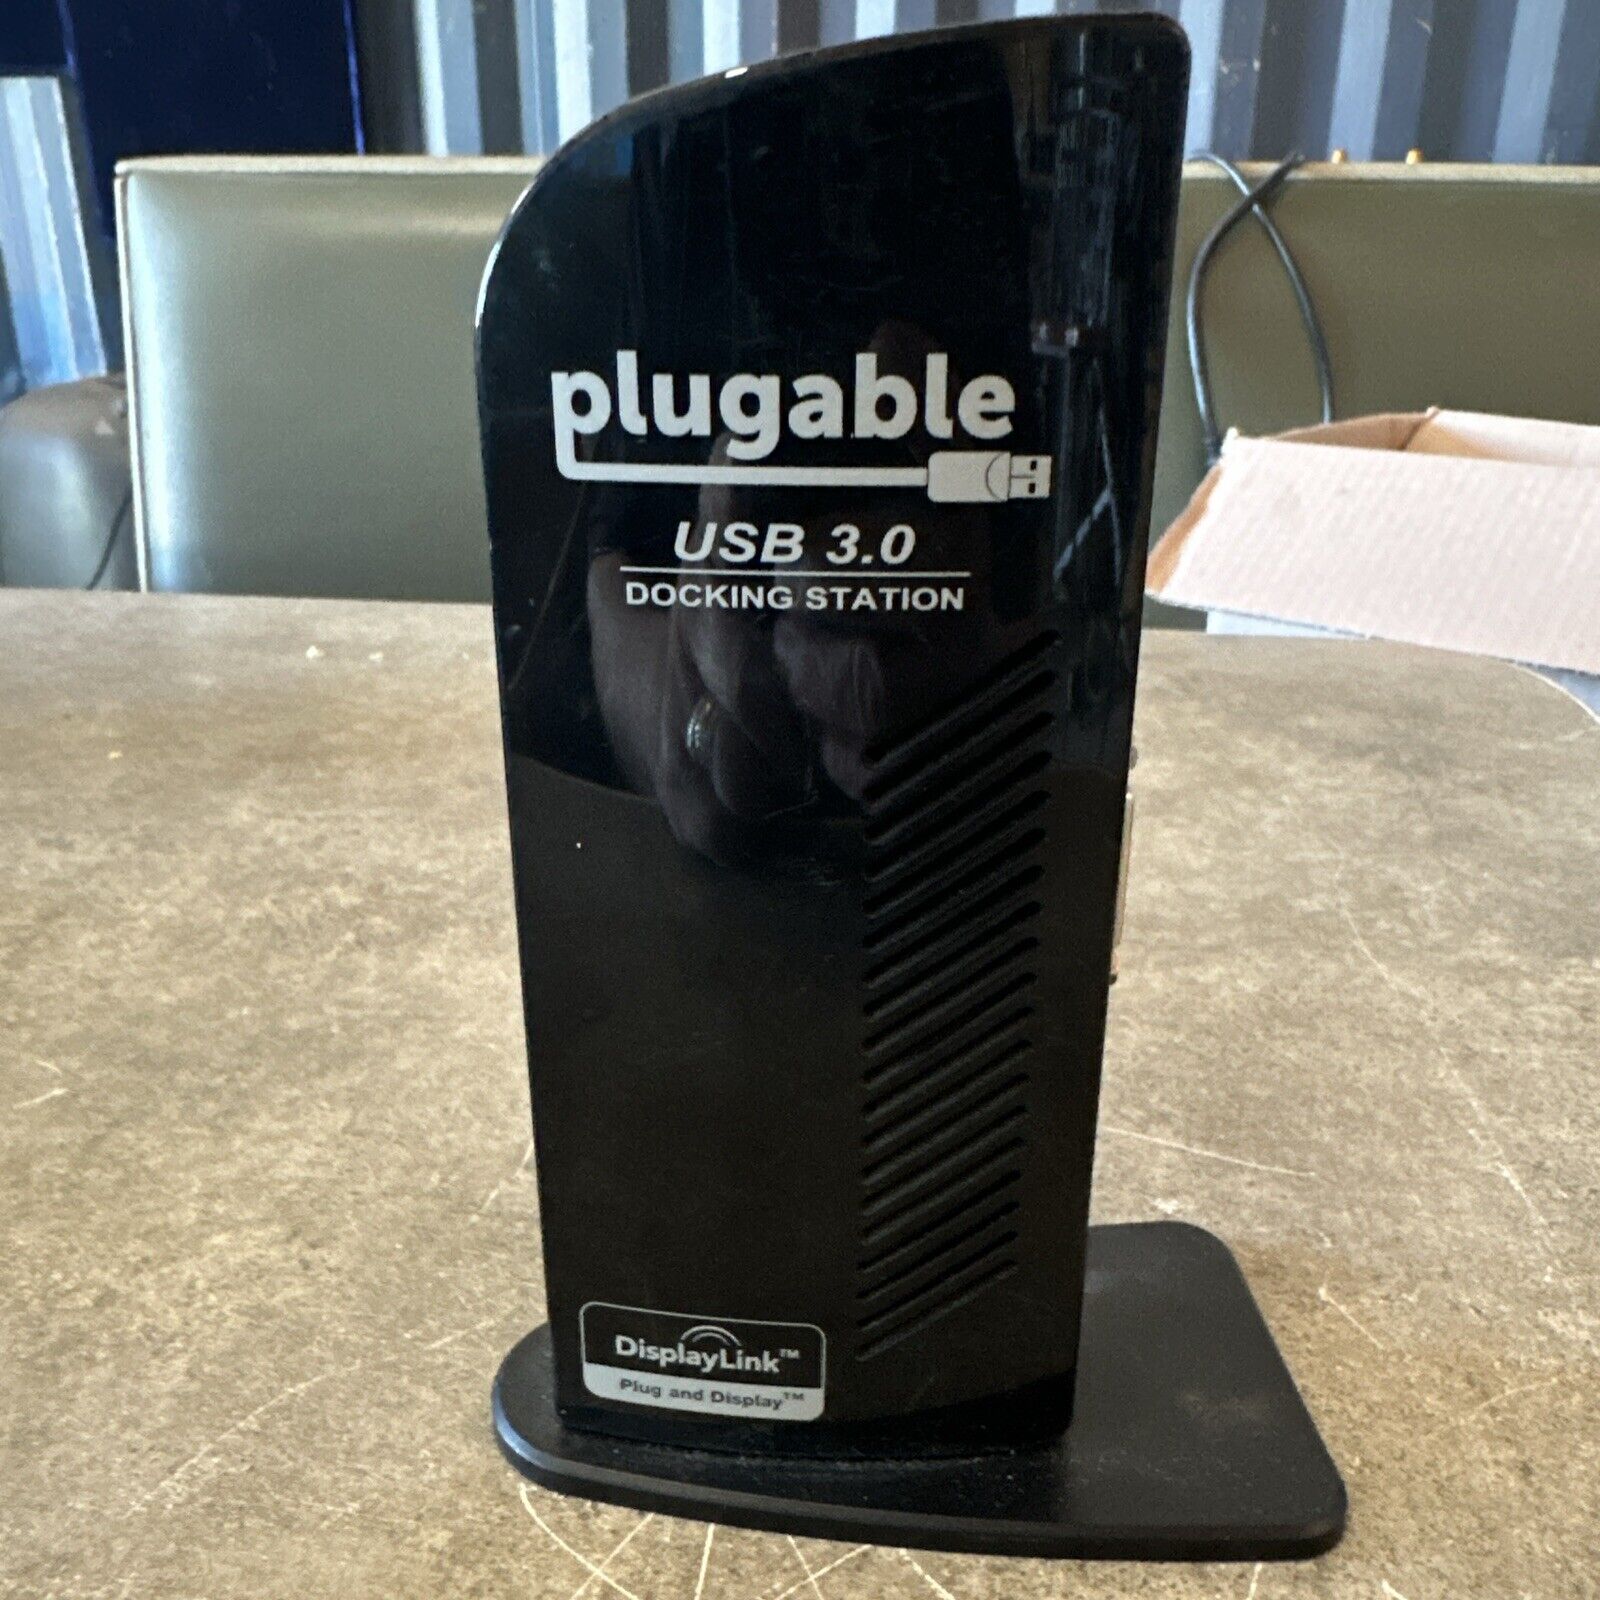 Plugable UD-3900 USB 3.0 Universal Docking Station for Windows